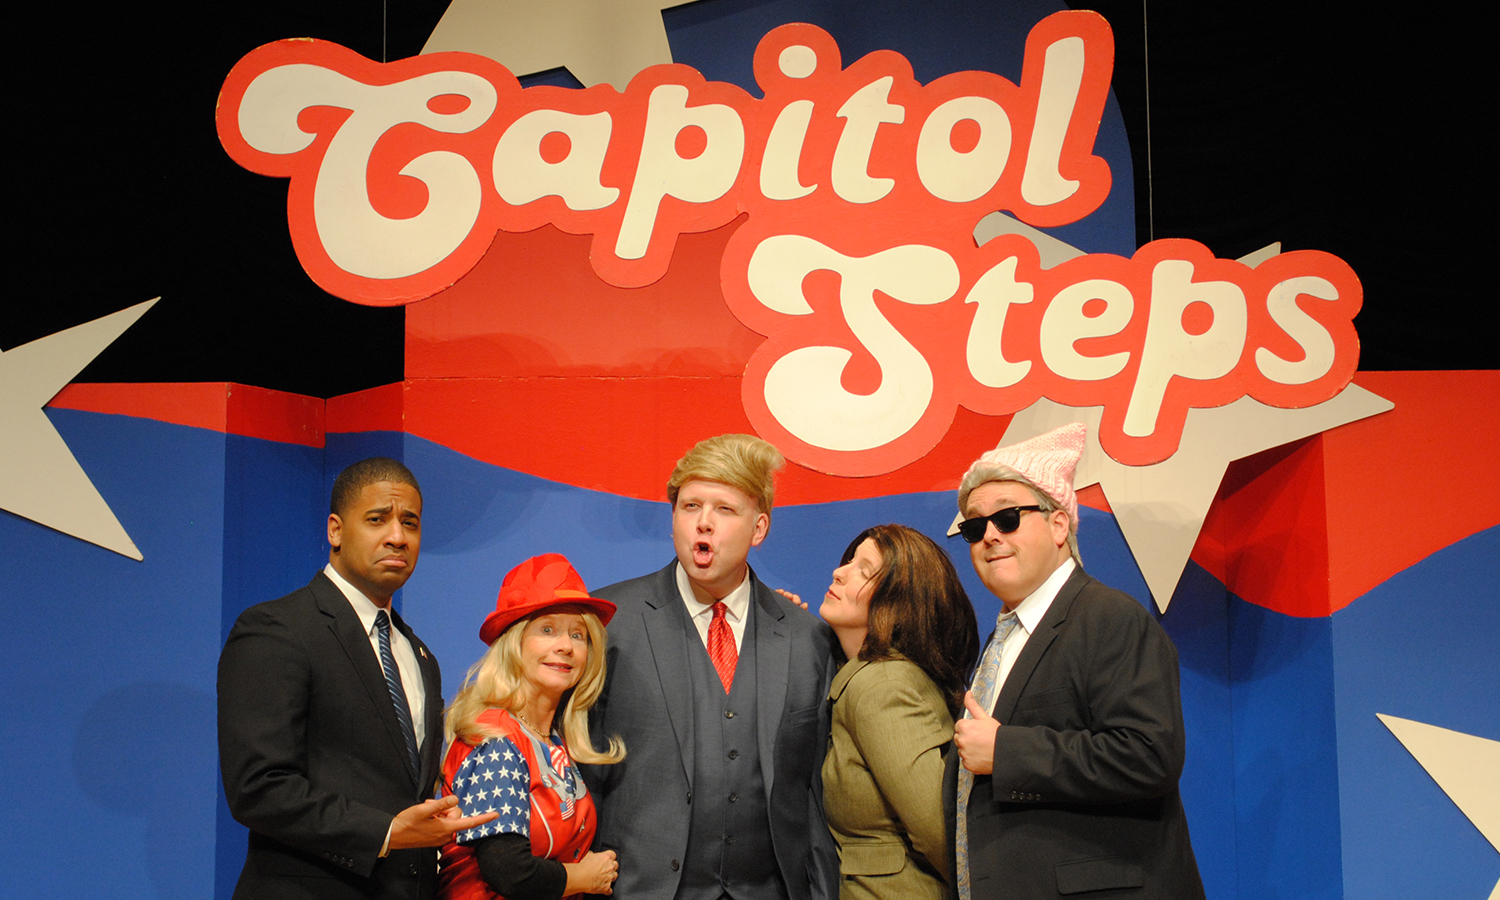 Capitol Steps will also perform Dec. 29-30 at Venice Theatre. Courtesy photo